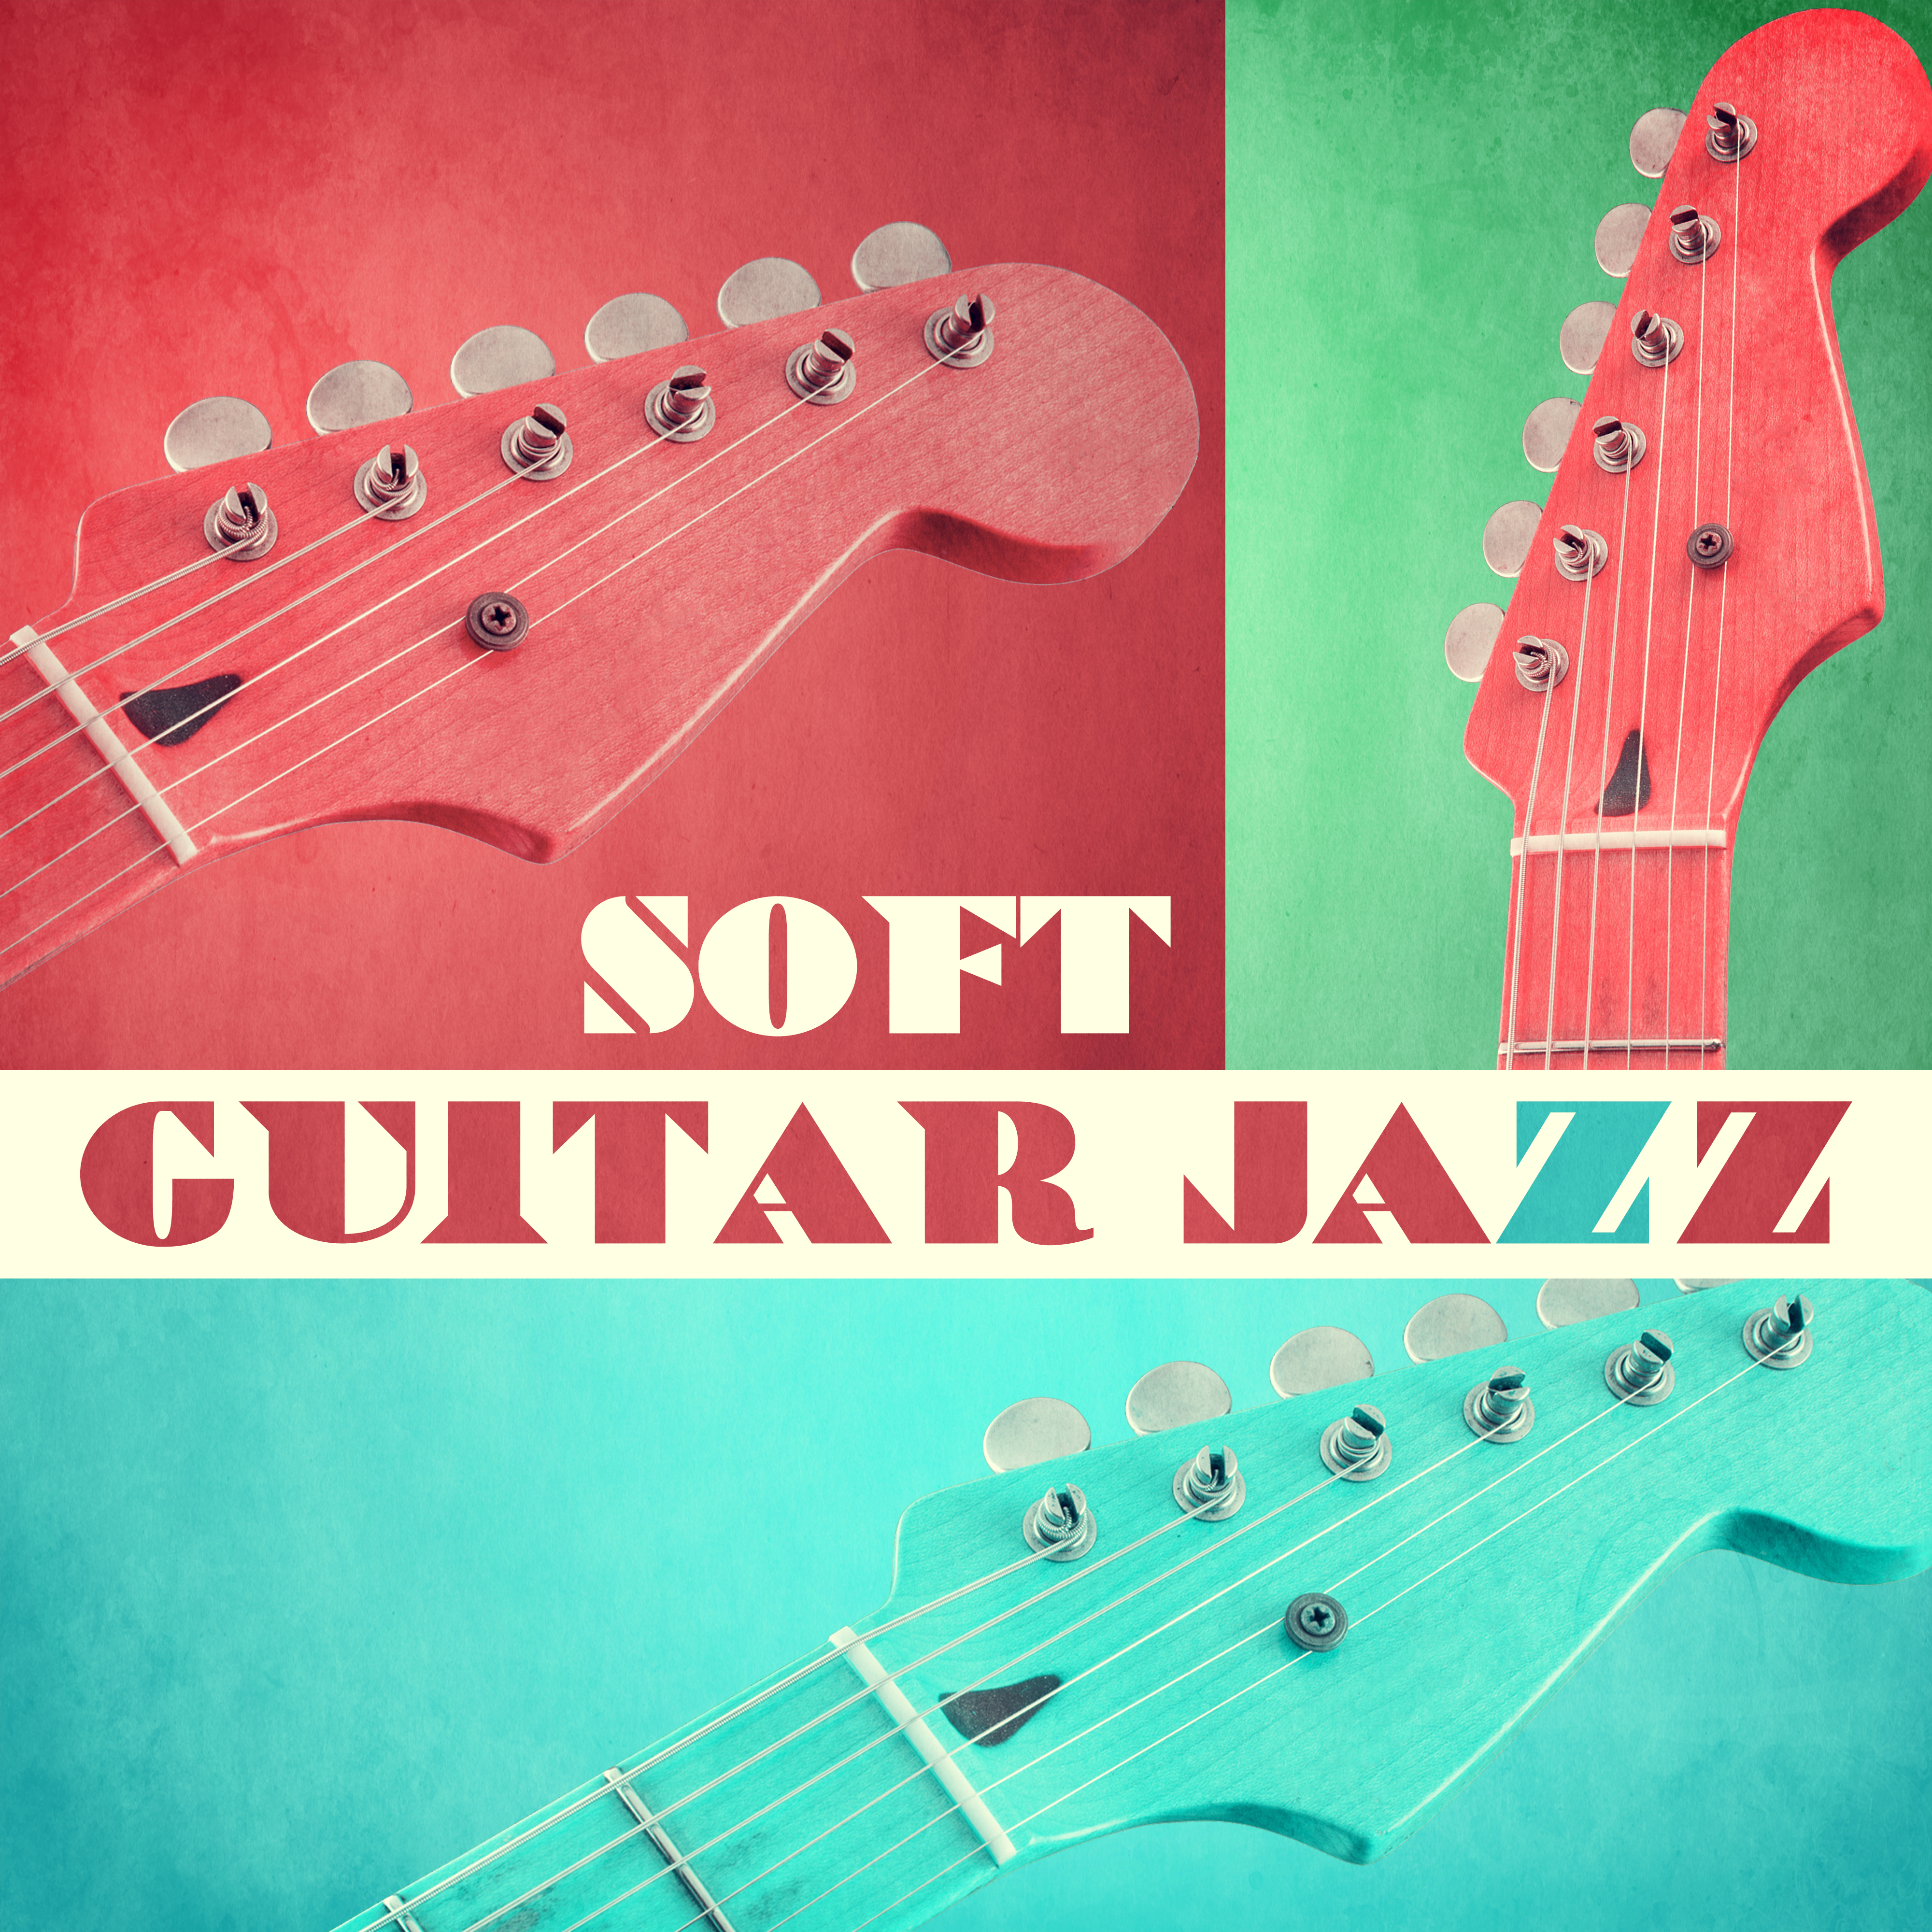 Soft Guitar Jazz